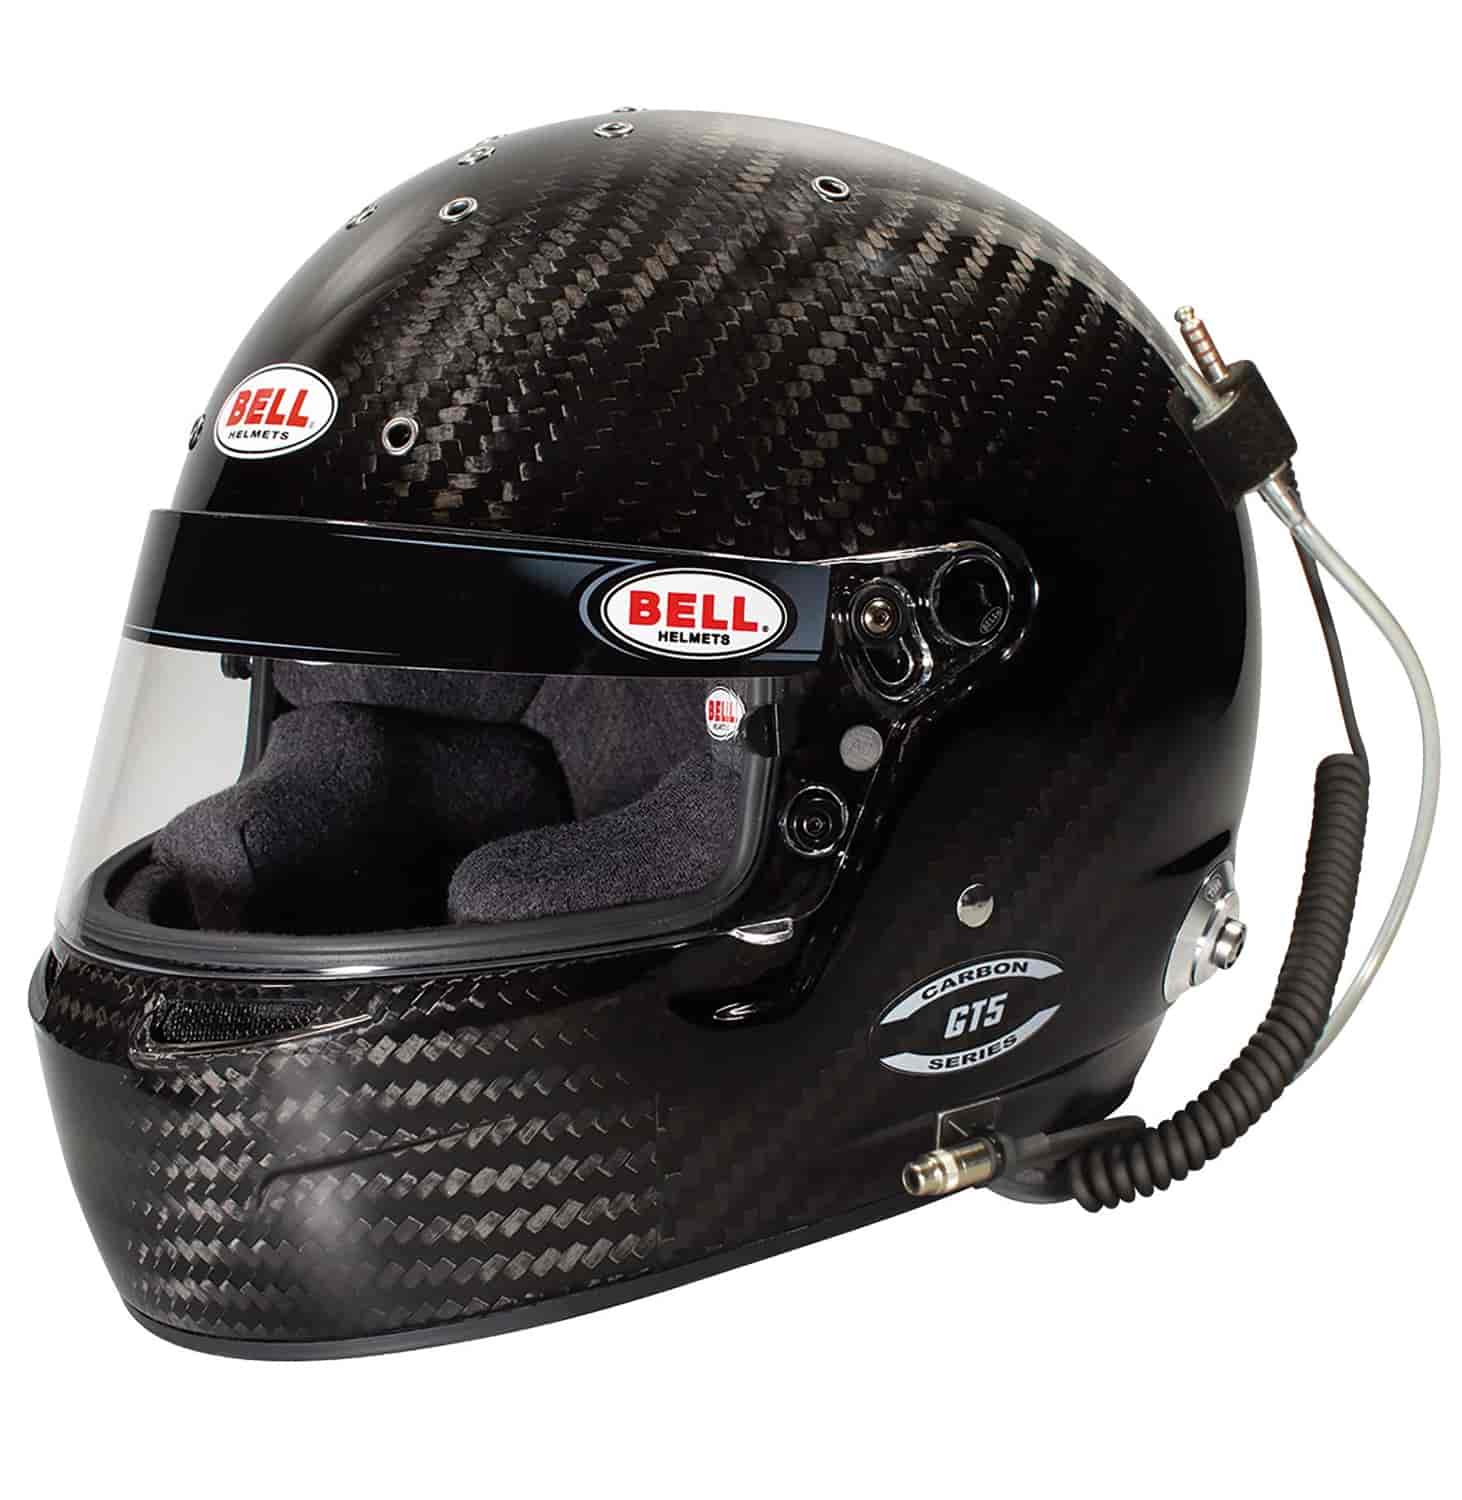 GT5RD Carbon Helmet - Size: 7 5/8